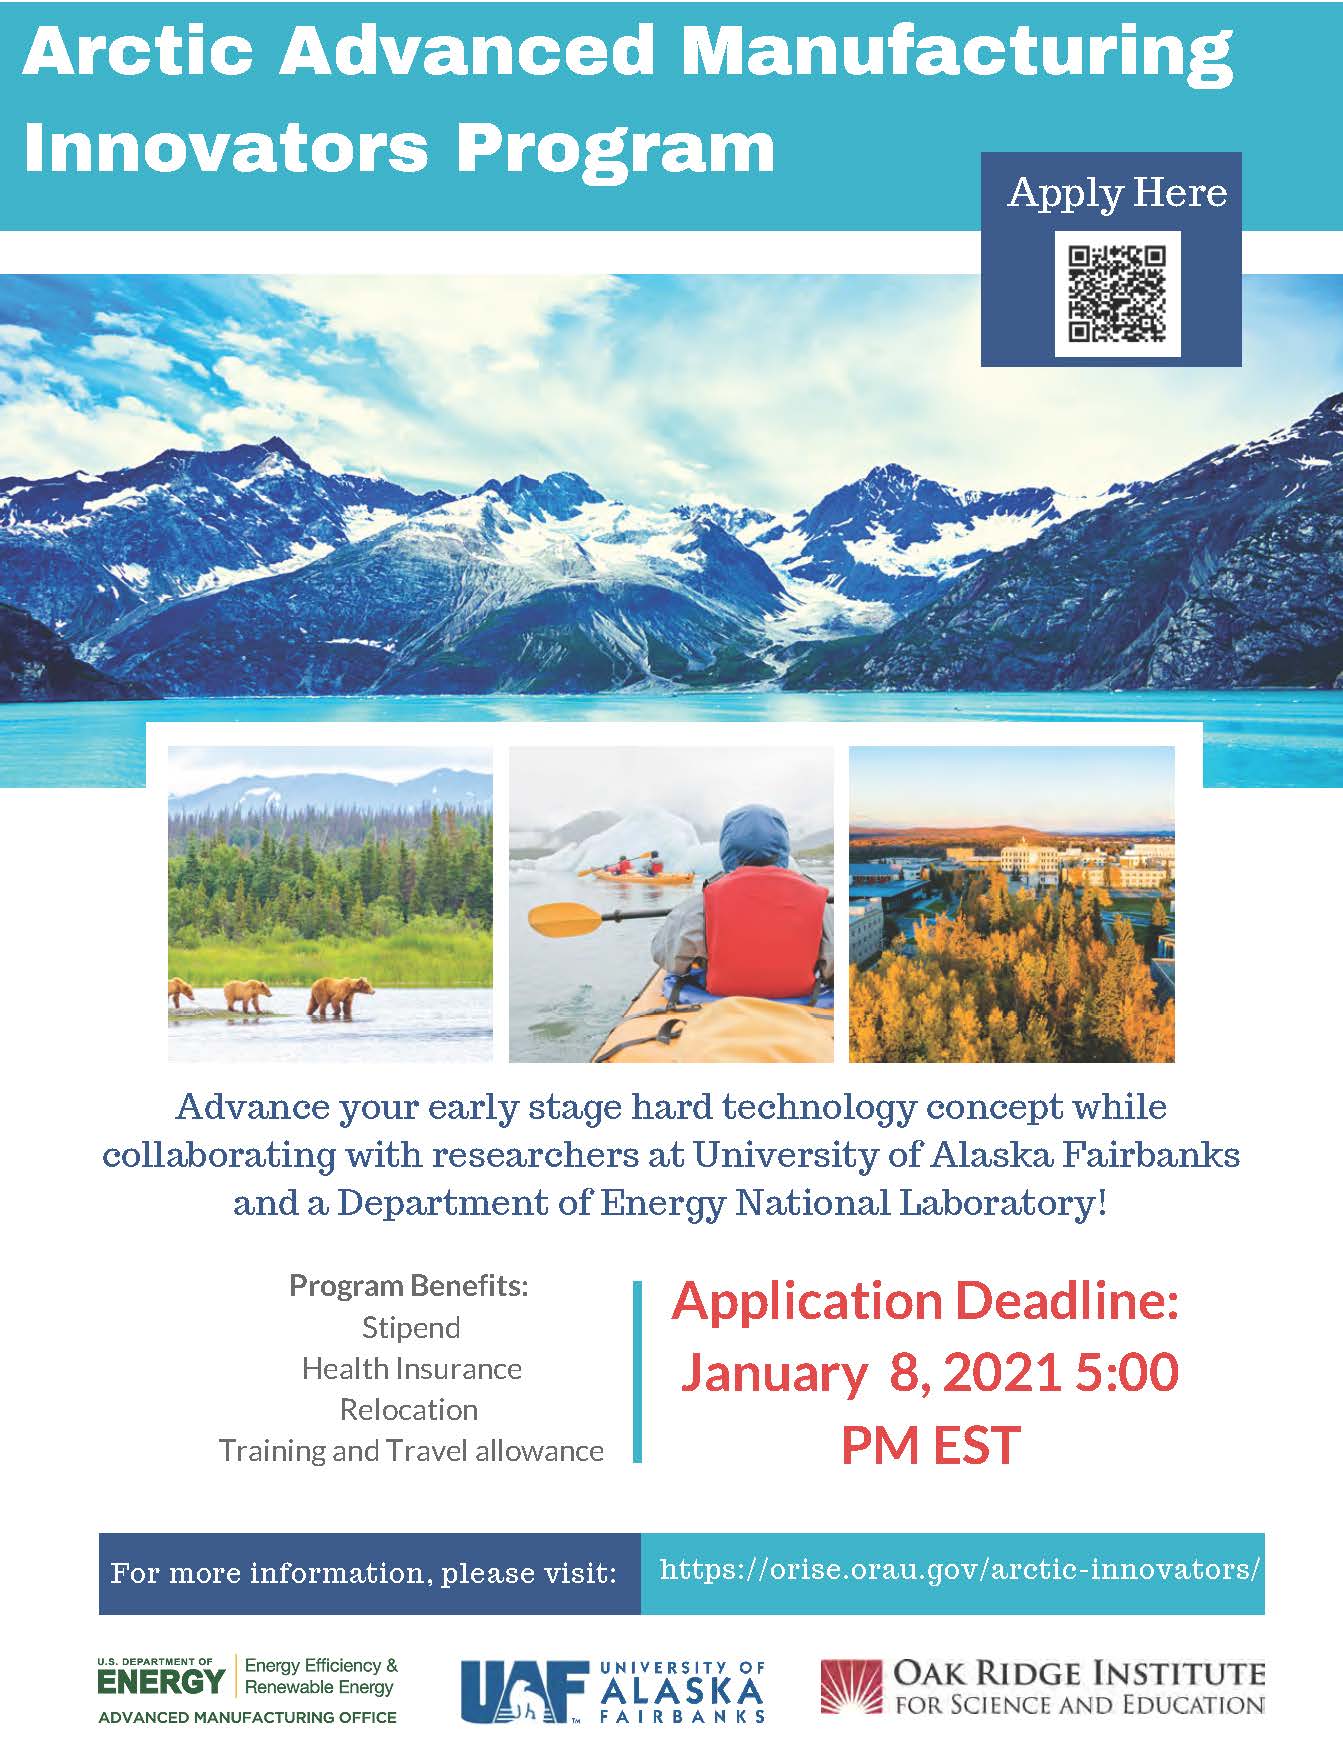 Apply Now for 2021 Arctic Innovator Program